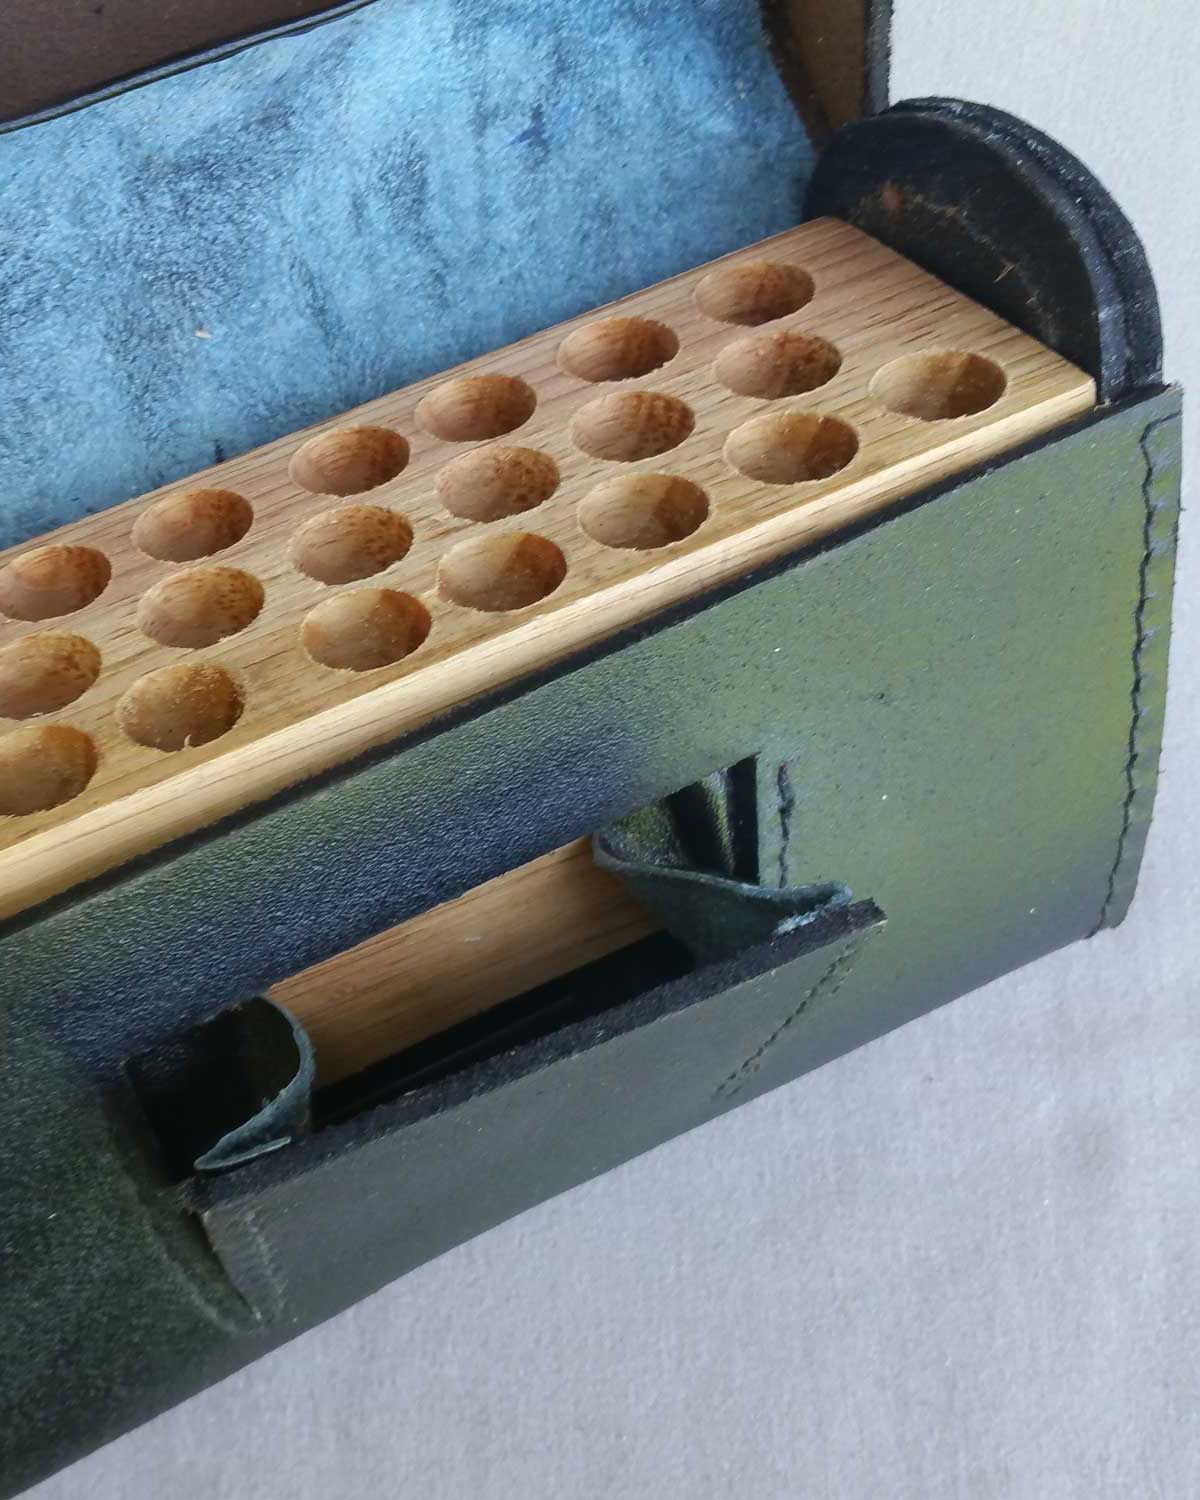 US, 26 Round Cartridge Box - War of 1812 - Click Image to Close